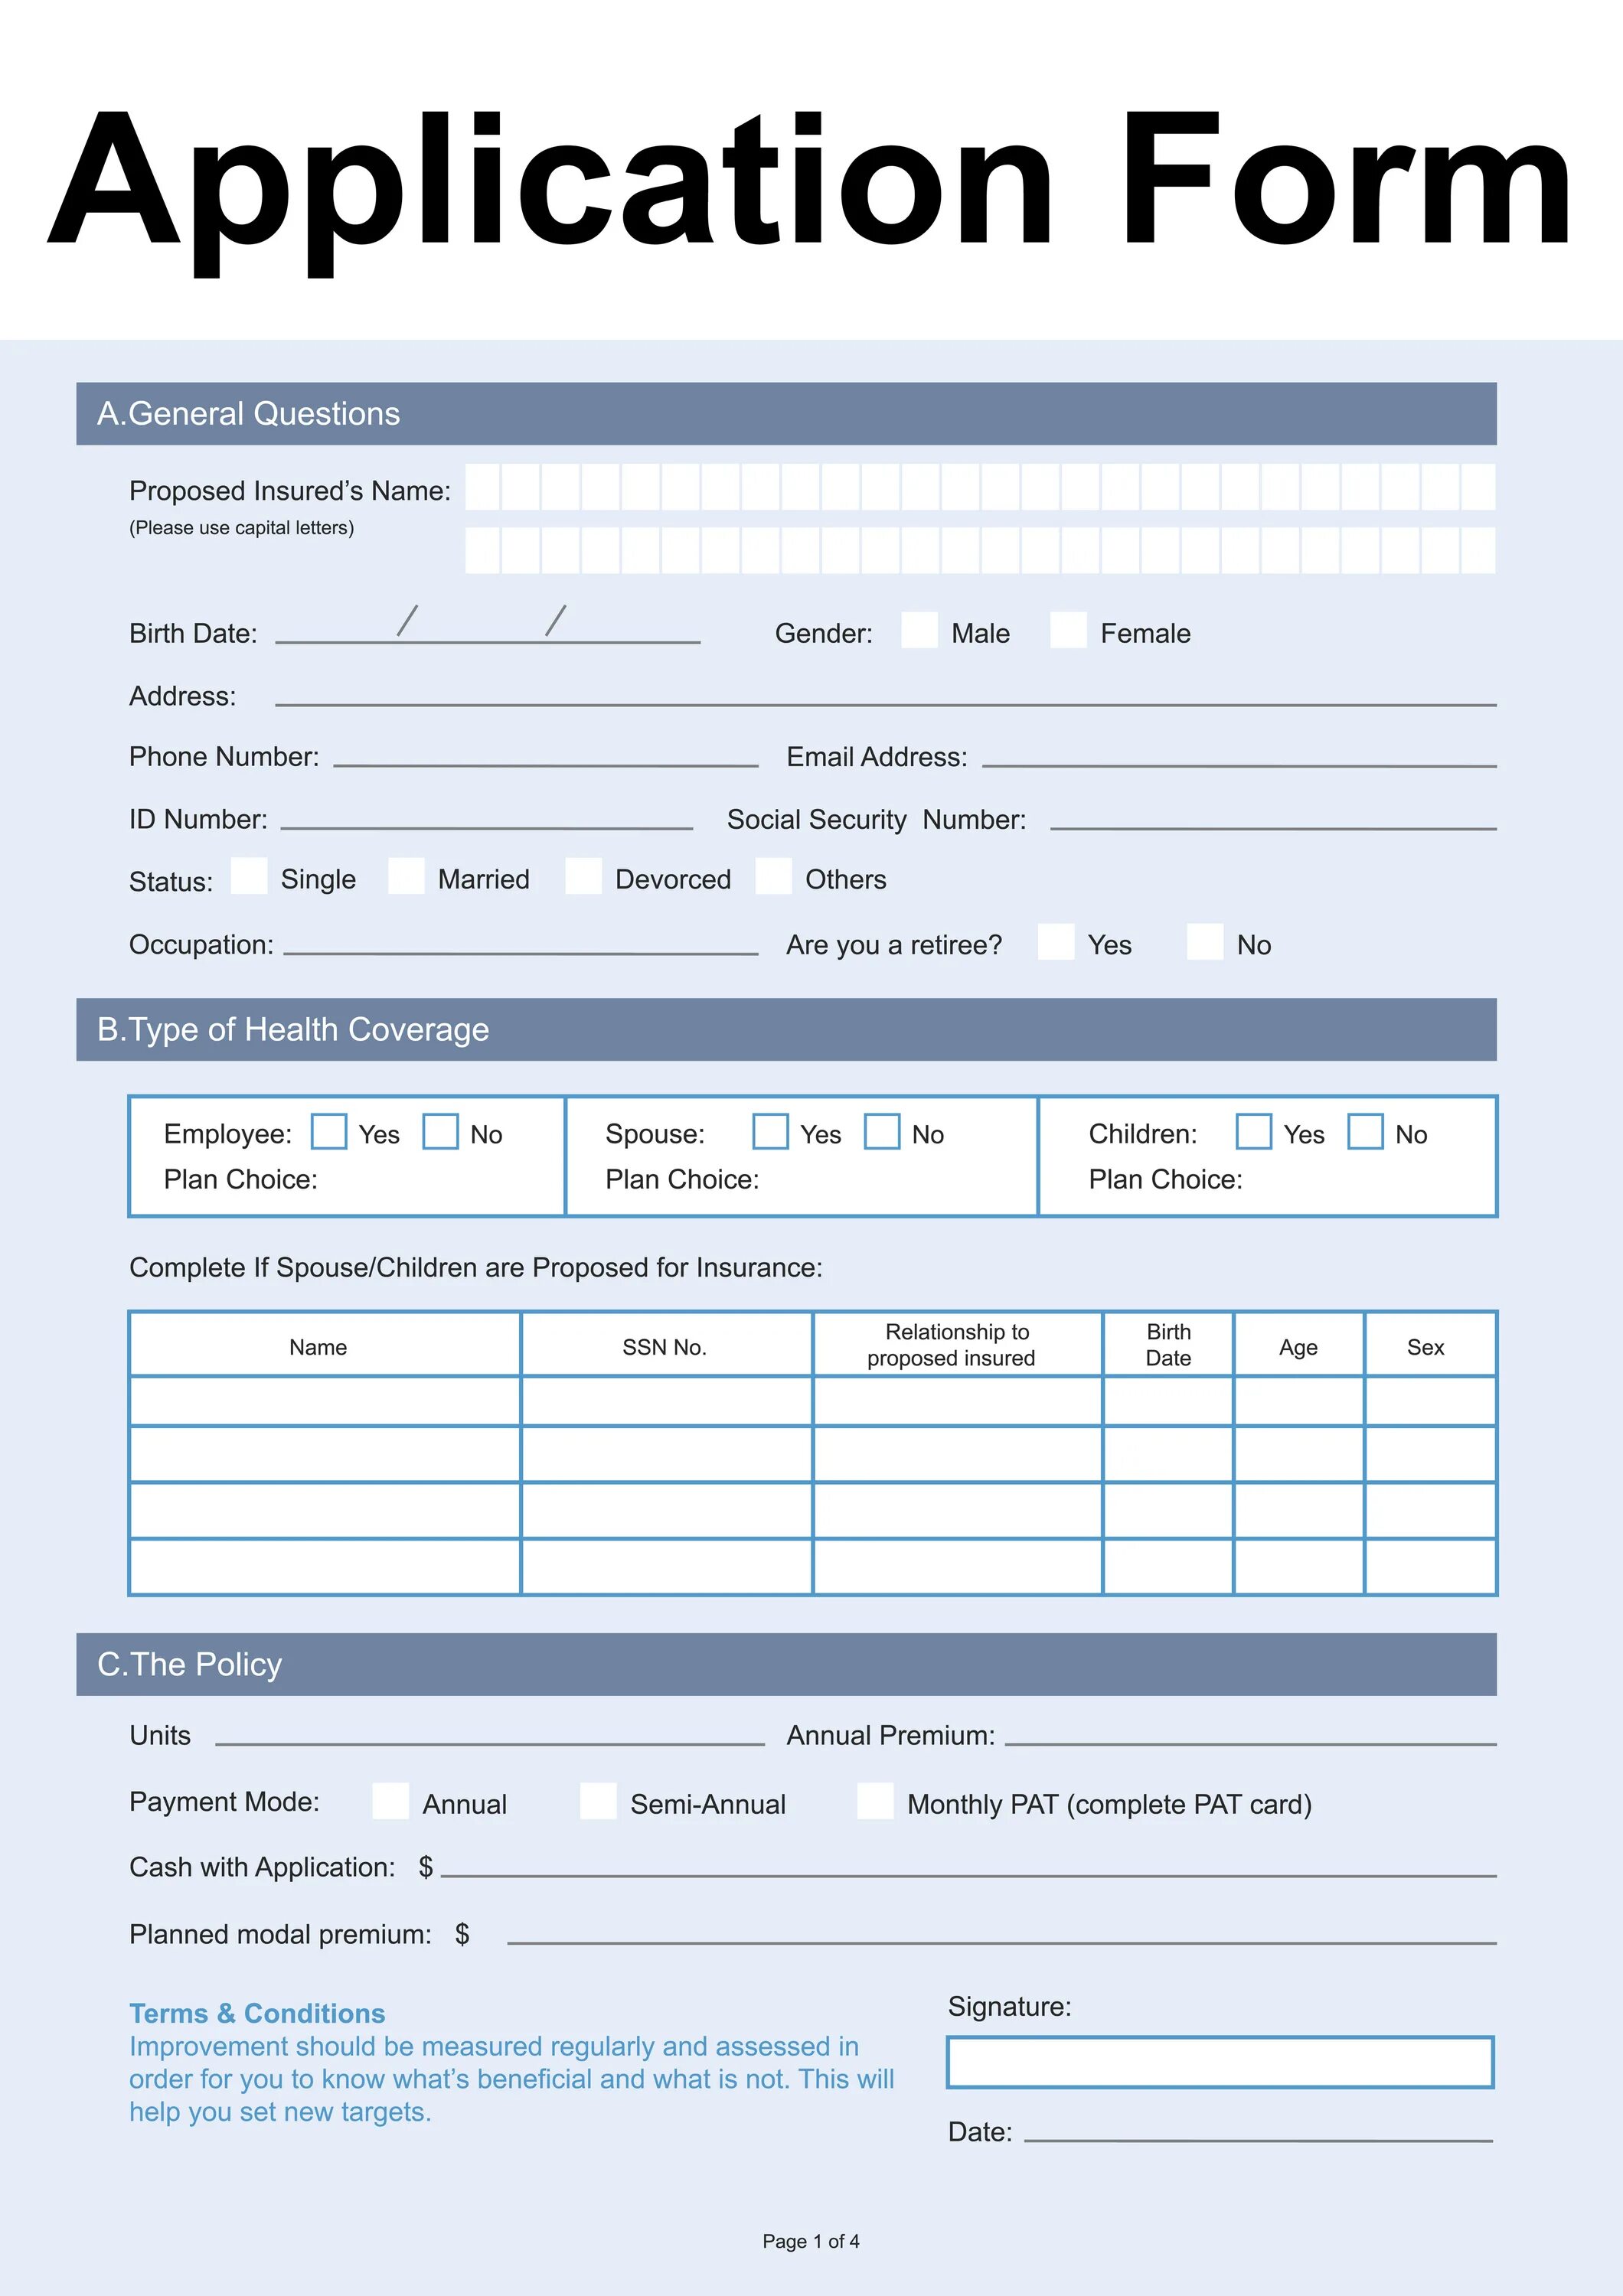 Download forms. Application form. Application form пример. Sample application form. Заполнить application form.